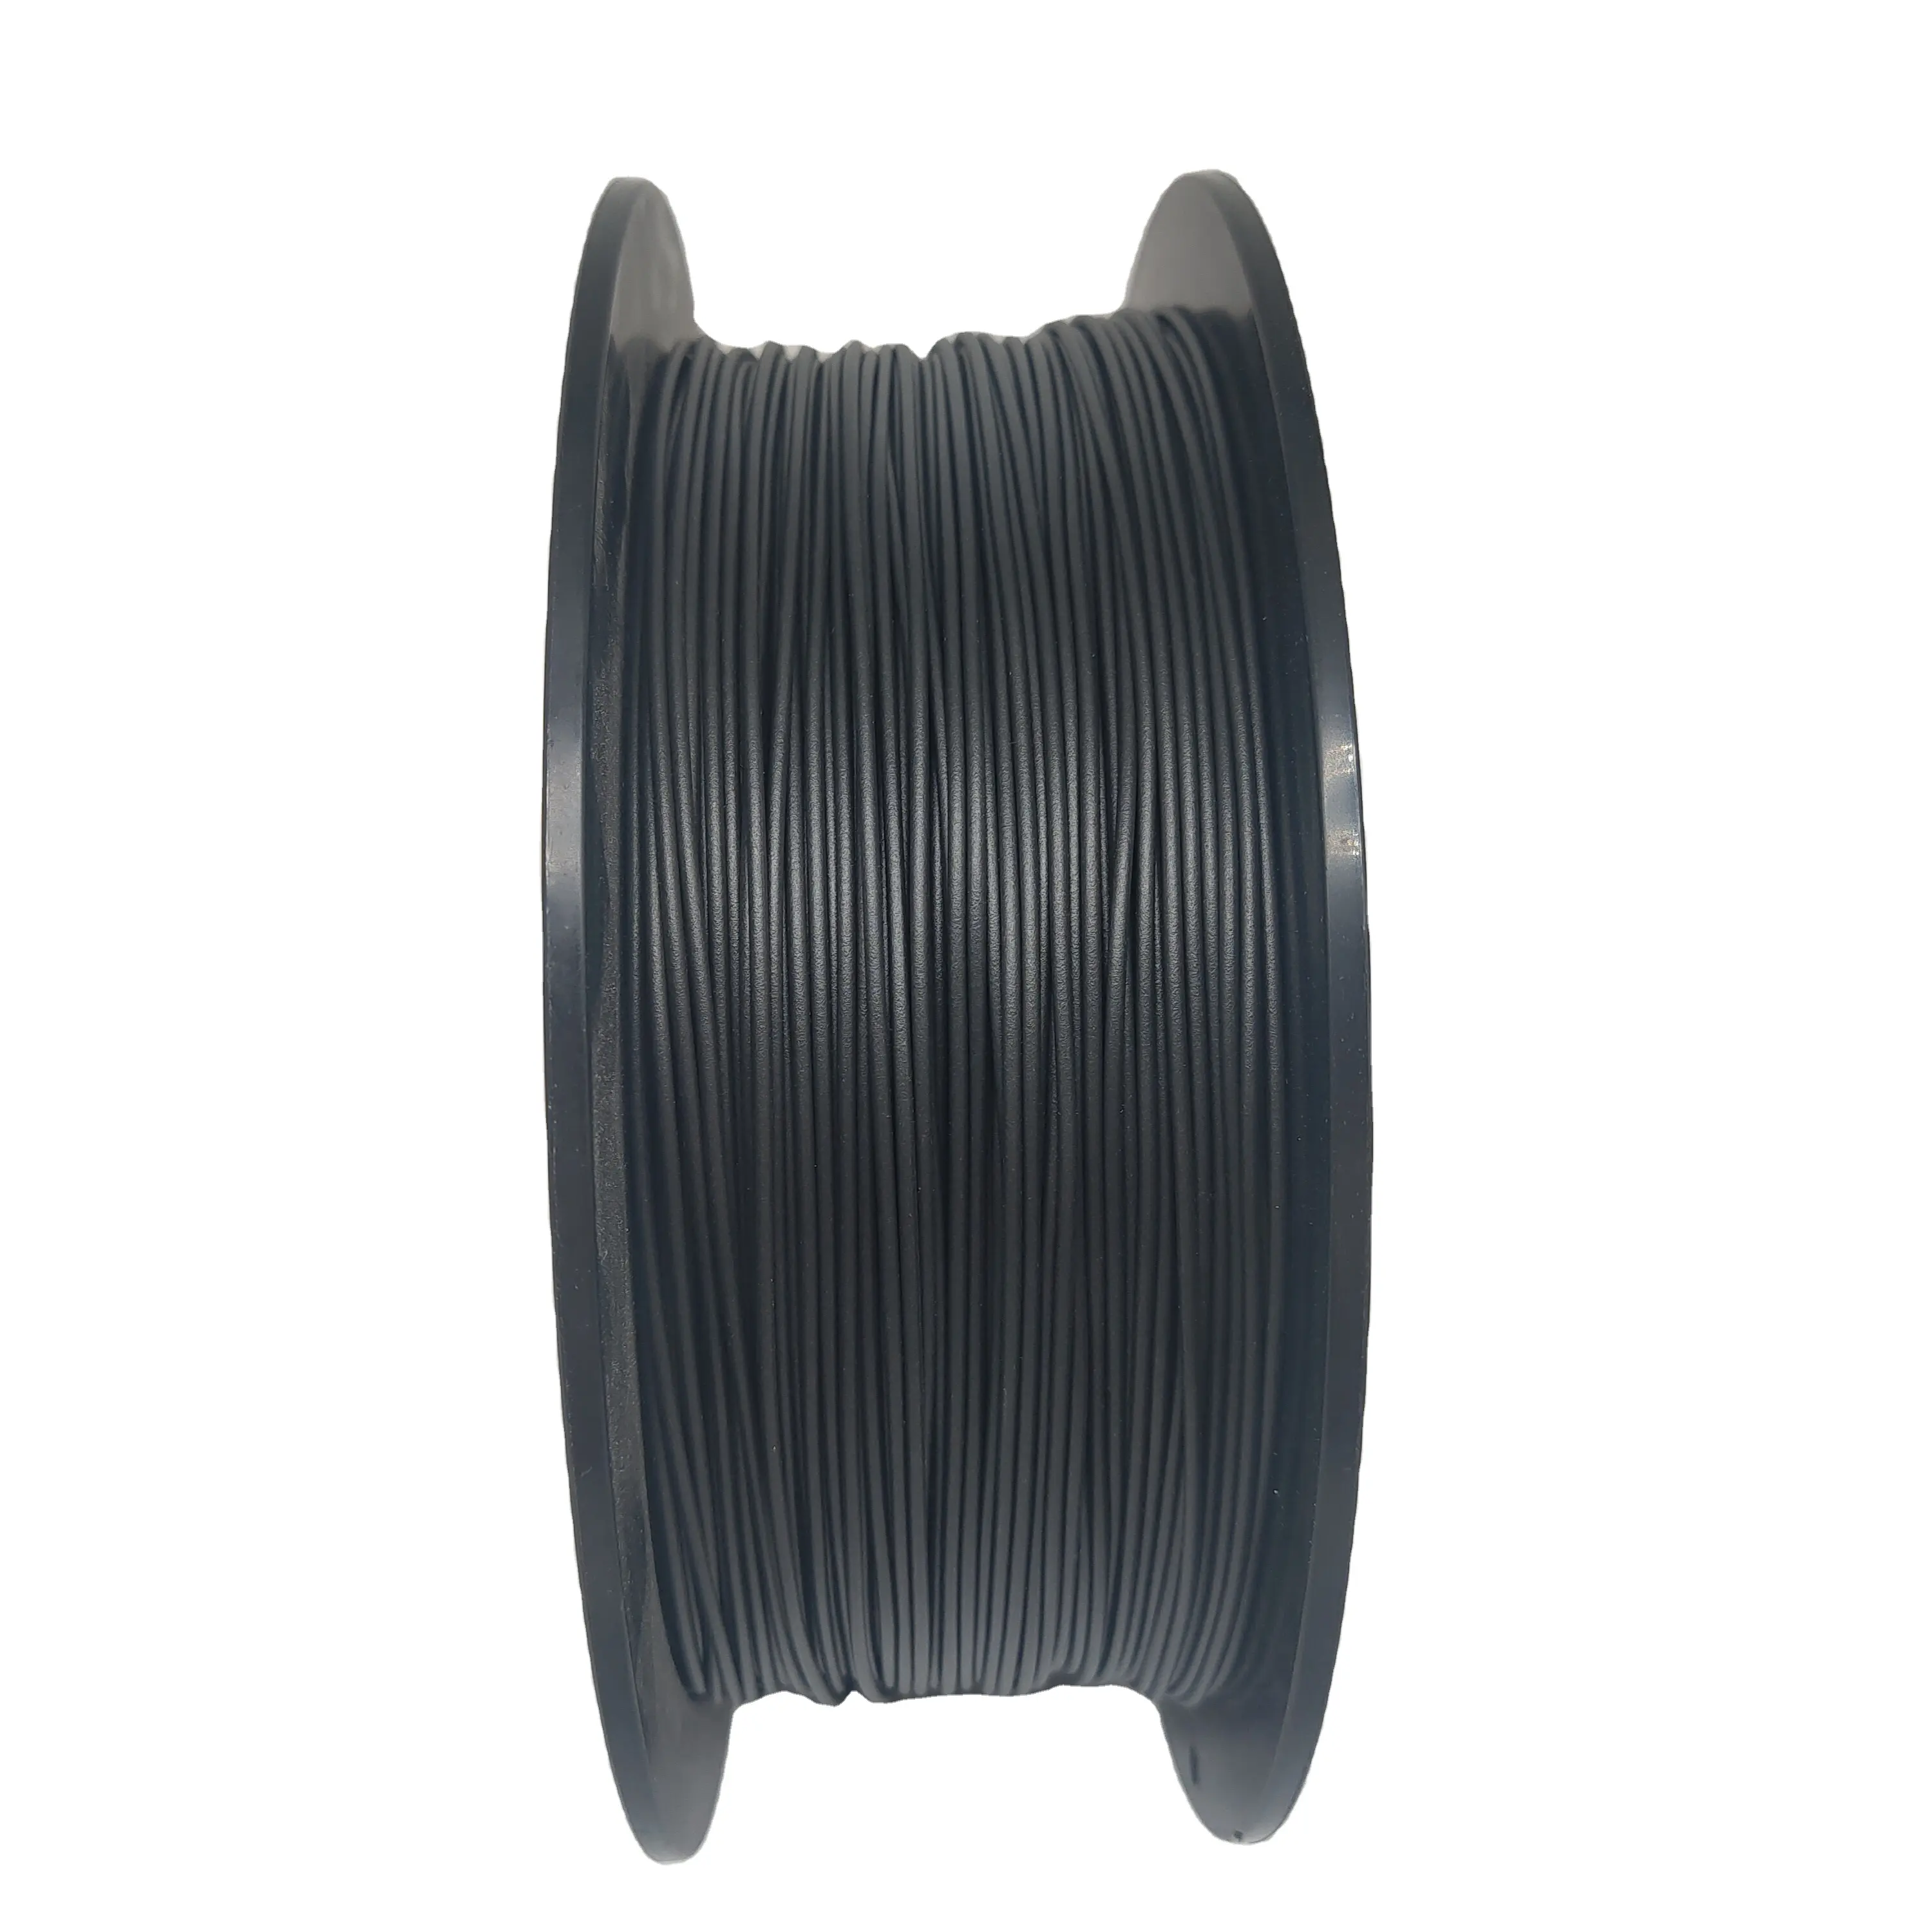 Filament For 3d Printer Hihg Quality Conductive ABS Filament For 3d Printer Filament ABS Conductive Filament For 3d Printing 1.75mm